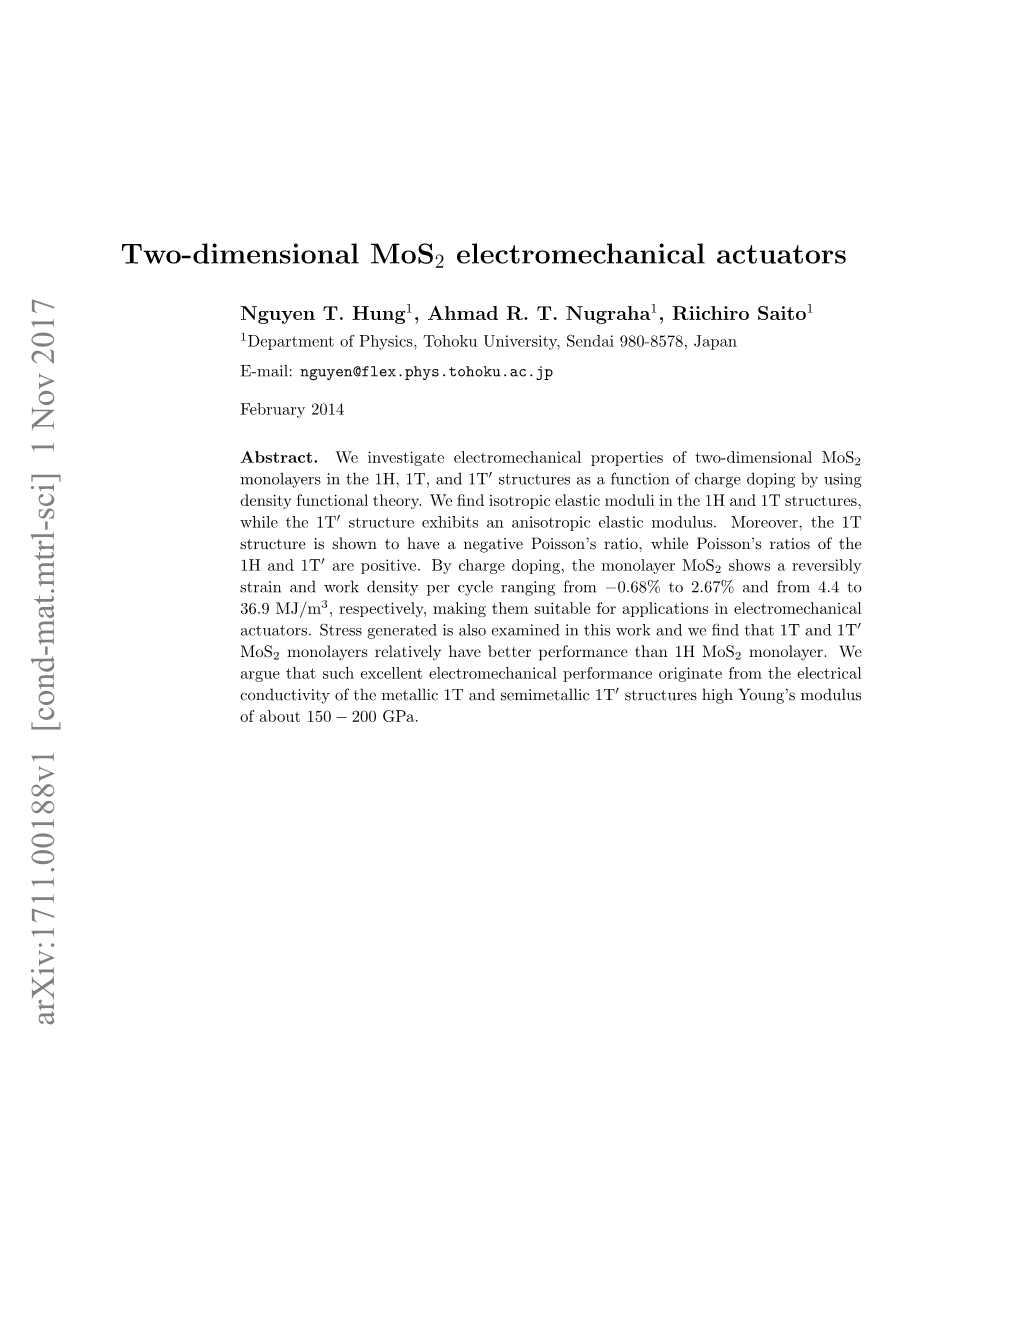 Two-Dimensional Mos2 Electromechanical Actuators